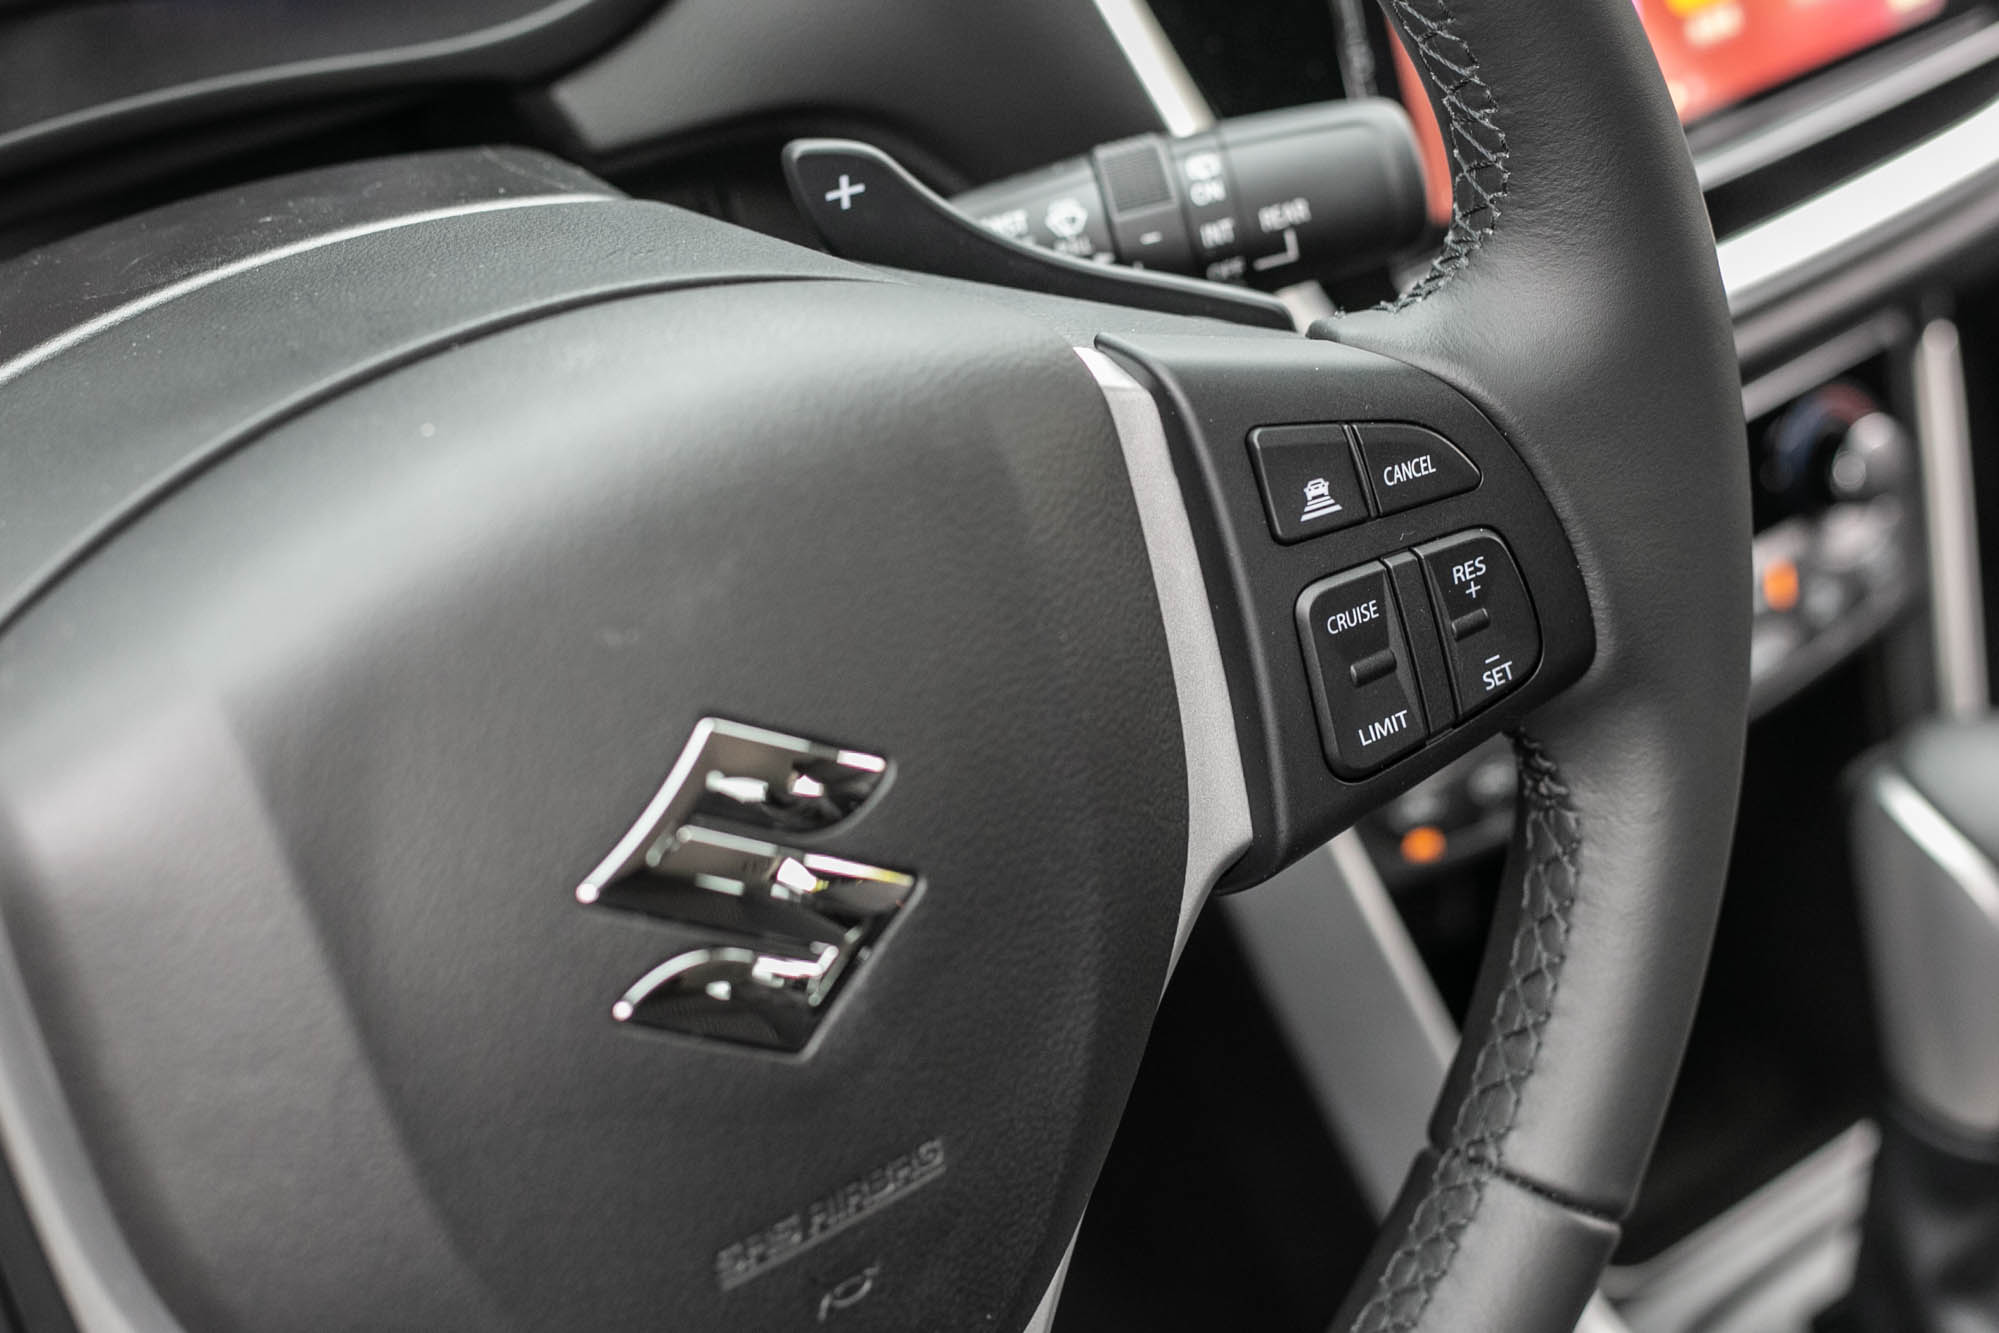 ACC 主動式車距巡航控制系統操作介面設置於方向盤左側。